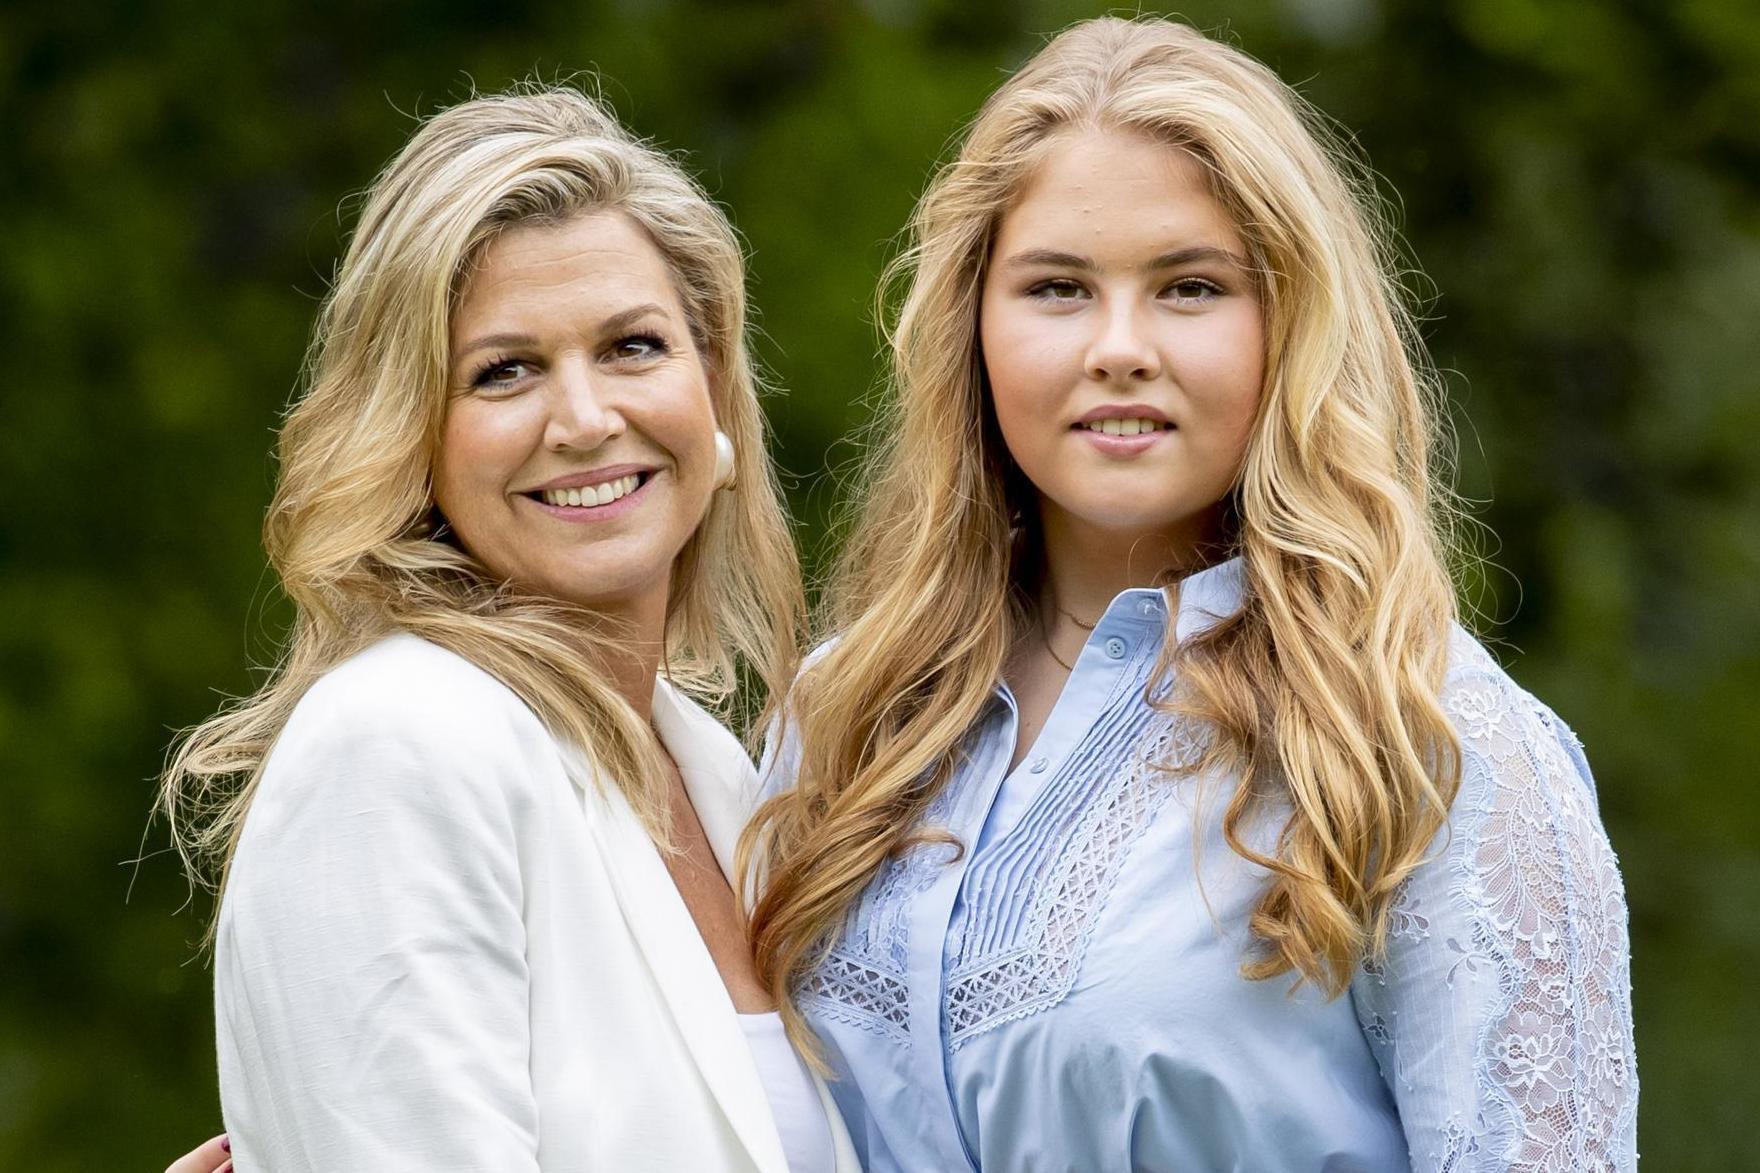 Caras magazine apologises for referring to Princess Catharina-Amalia as 'plus-size' (Getty)